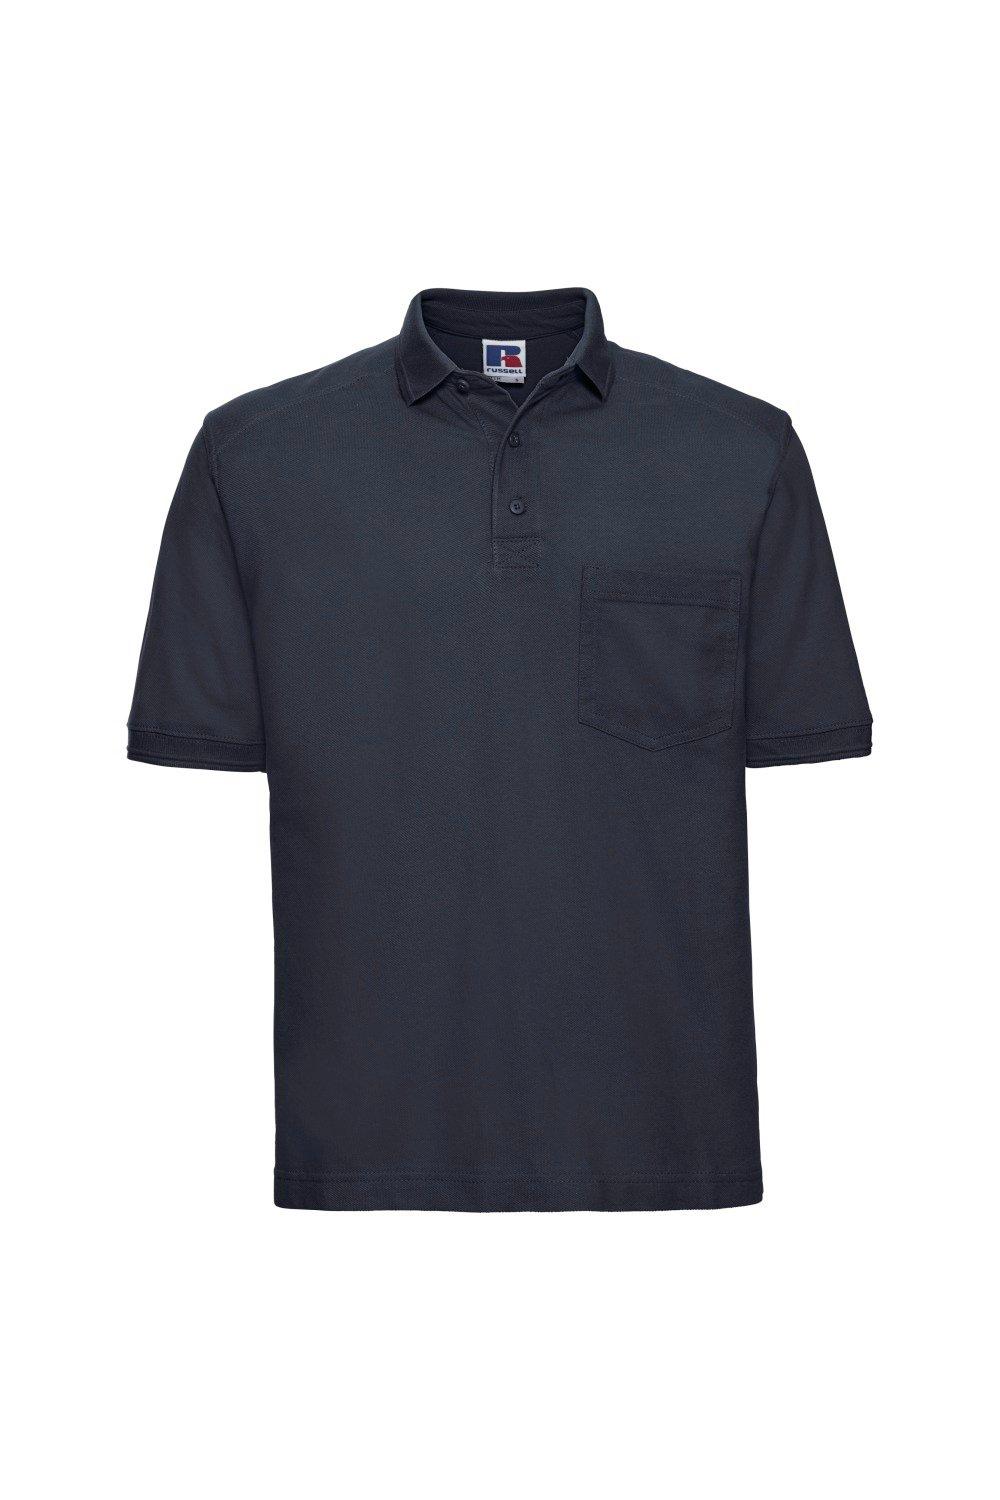 цена Рубашка поло с короткими рукавами и спецодеждой Russell, темно-синий